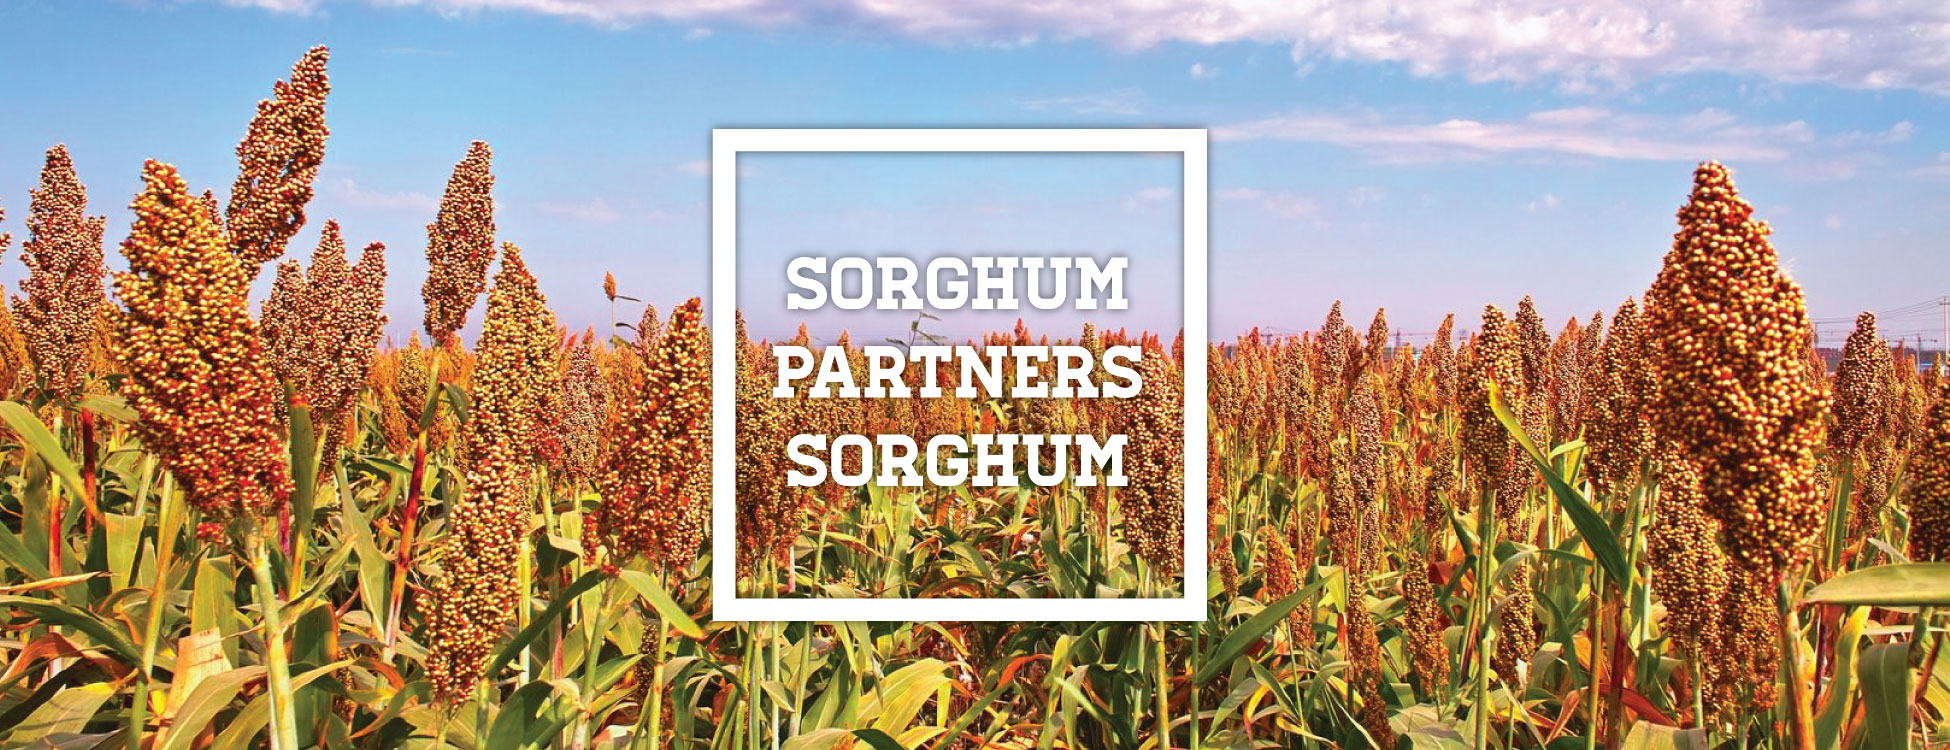 Sorghum Partners Sorghum